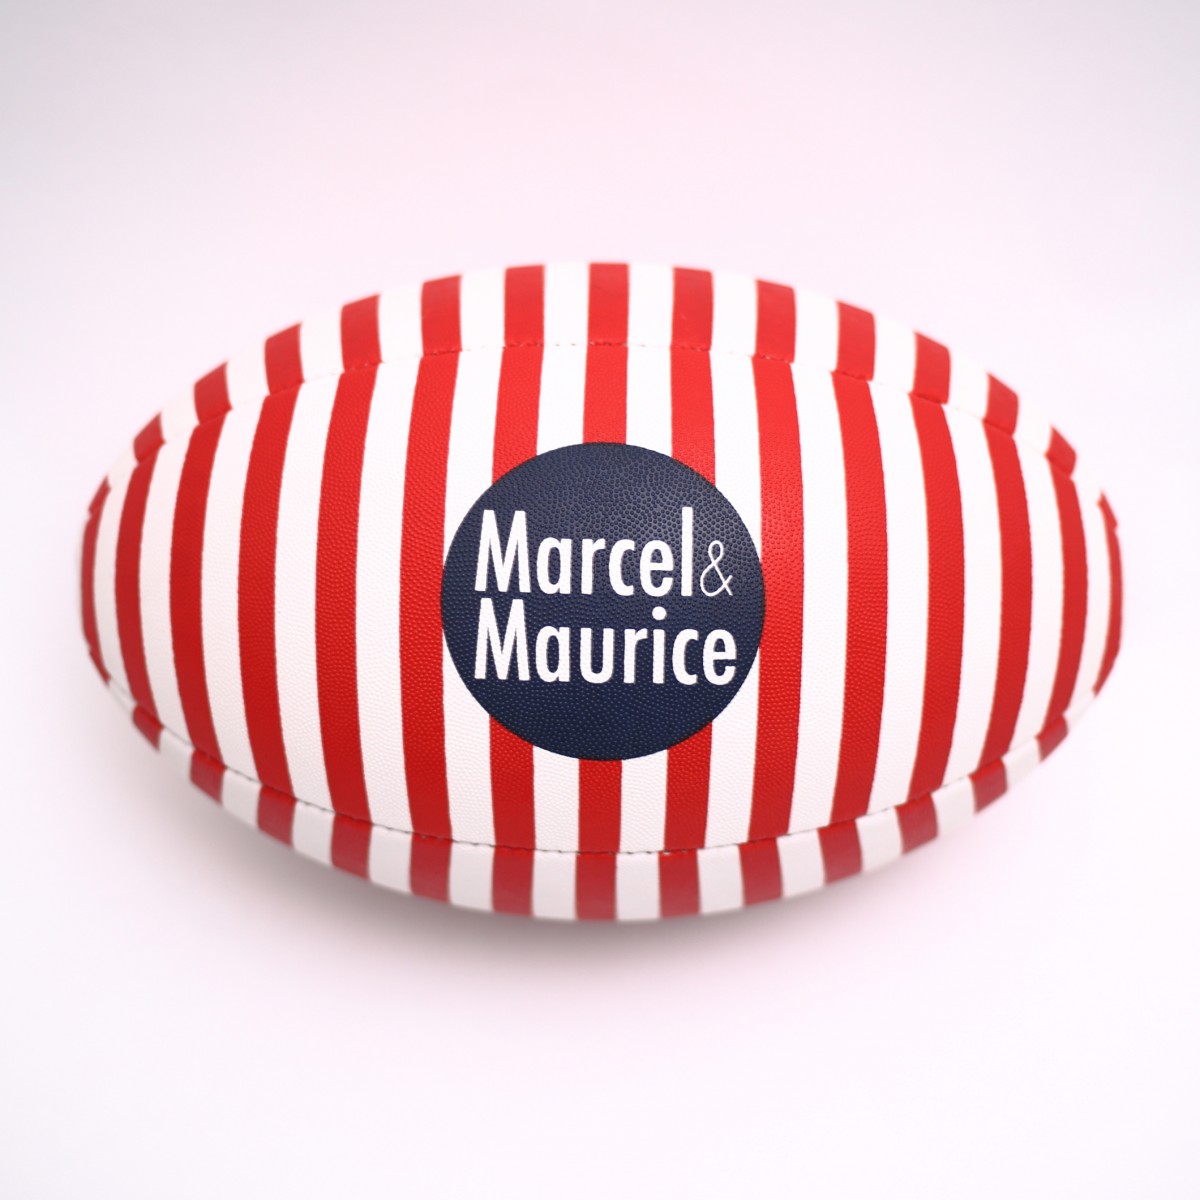 Marcel & Maurice - Ballon de rugby